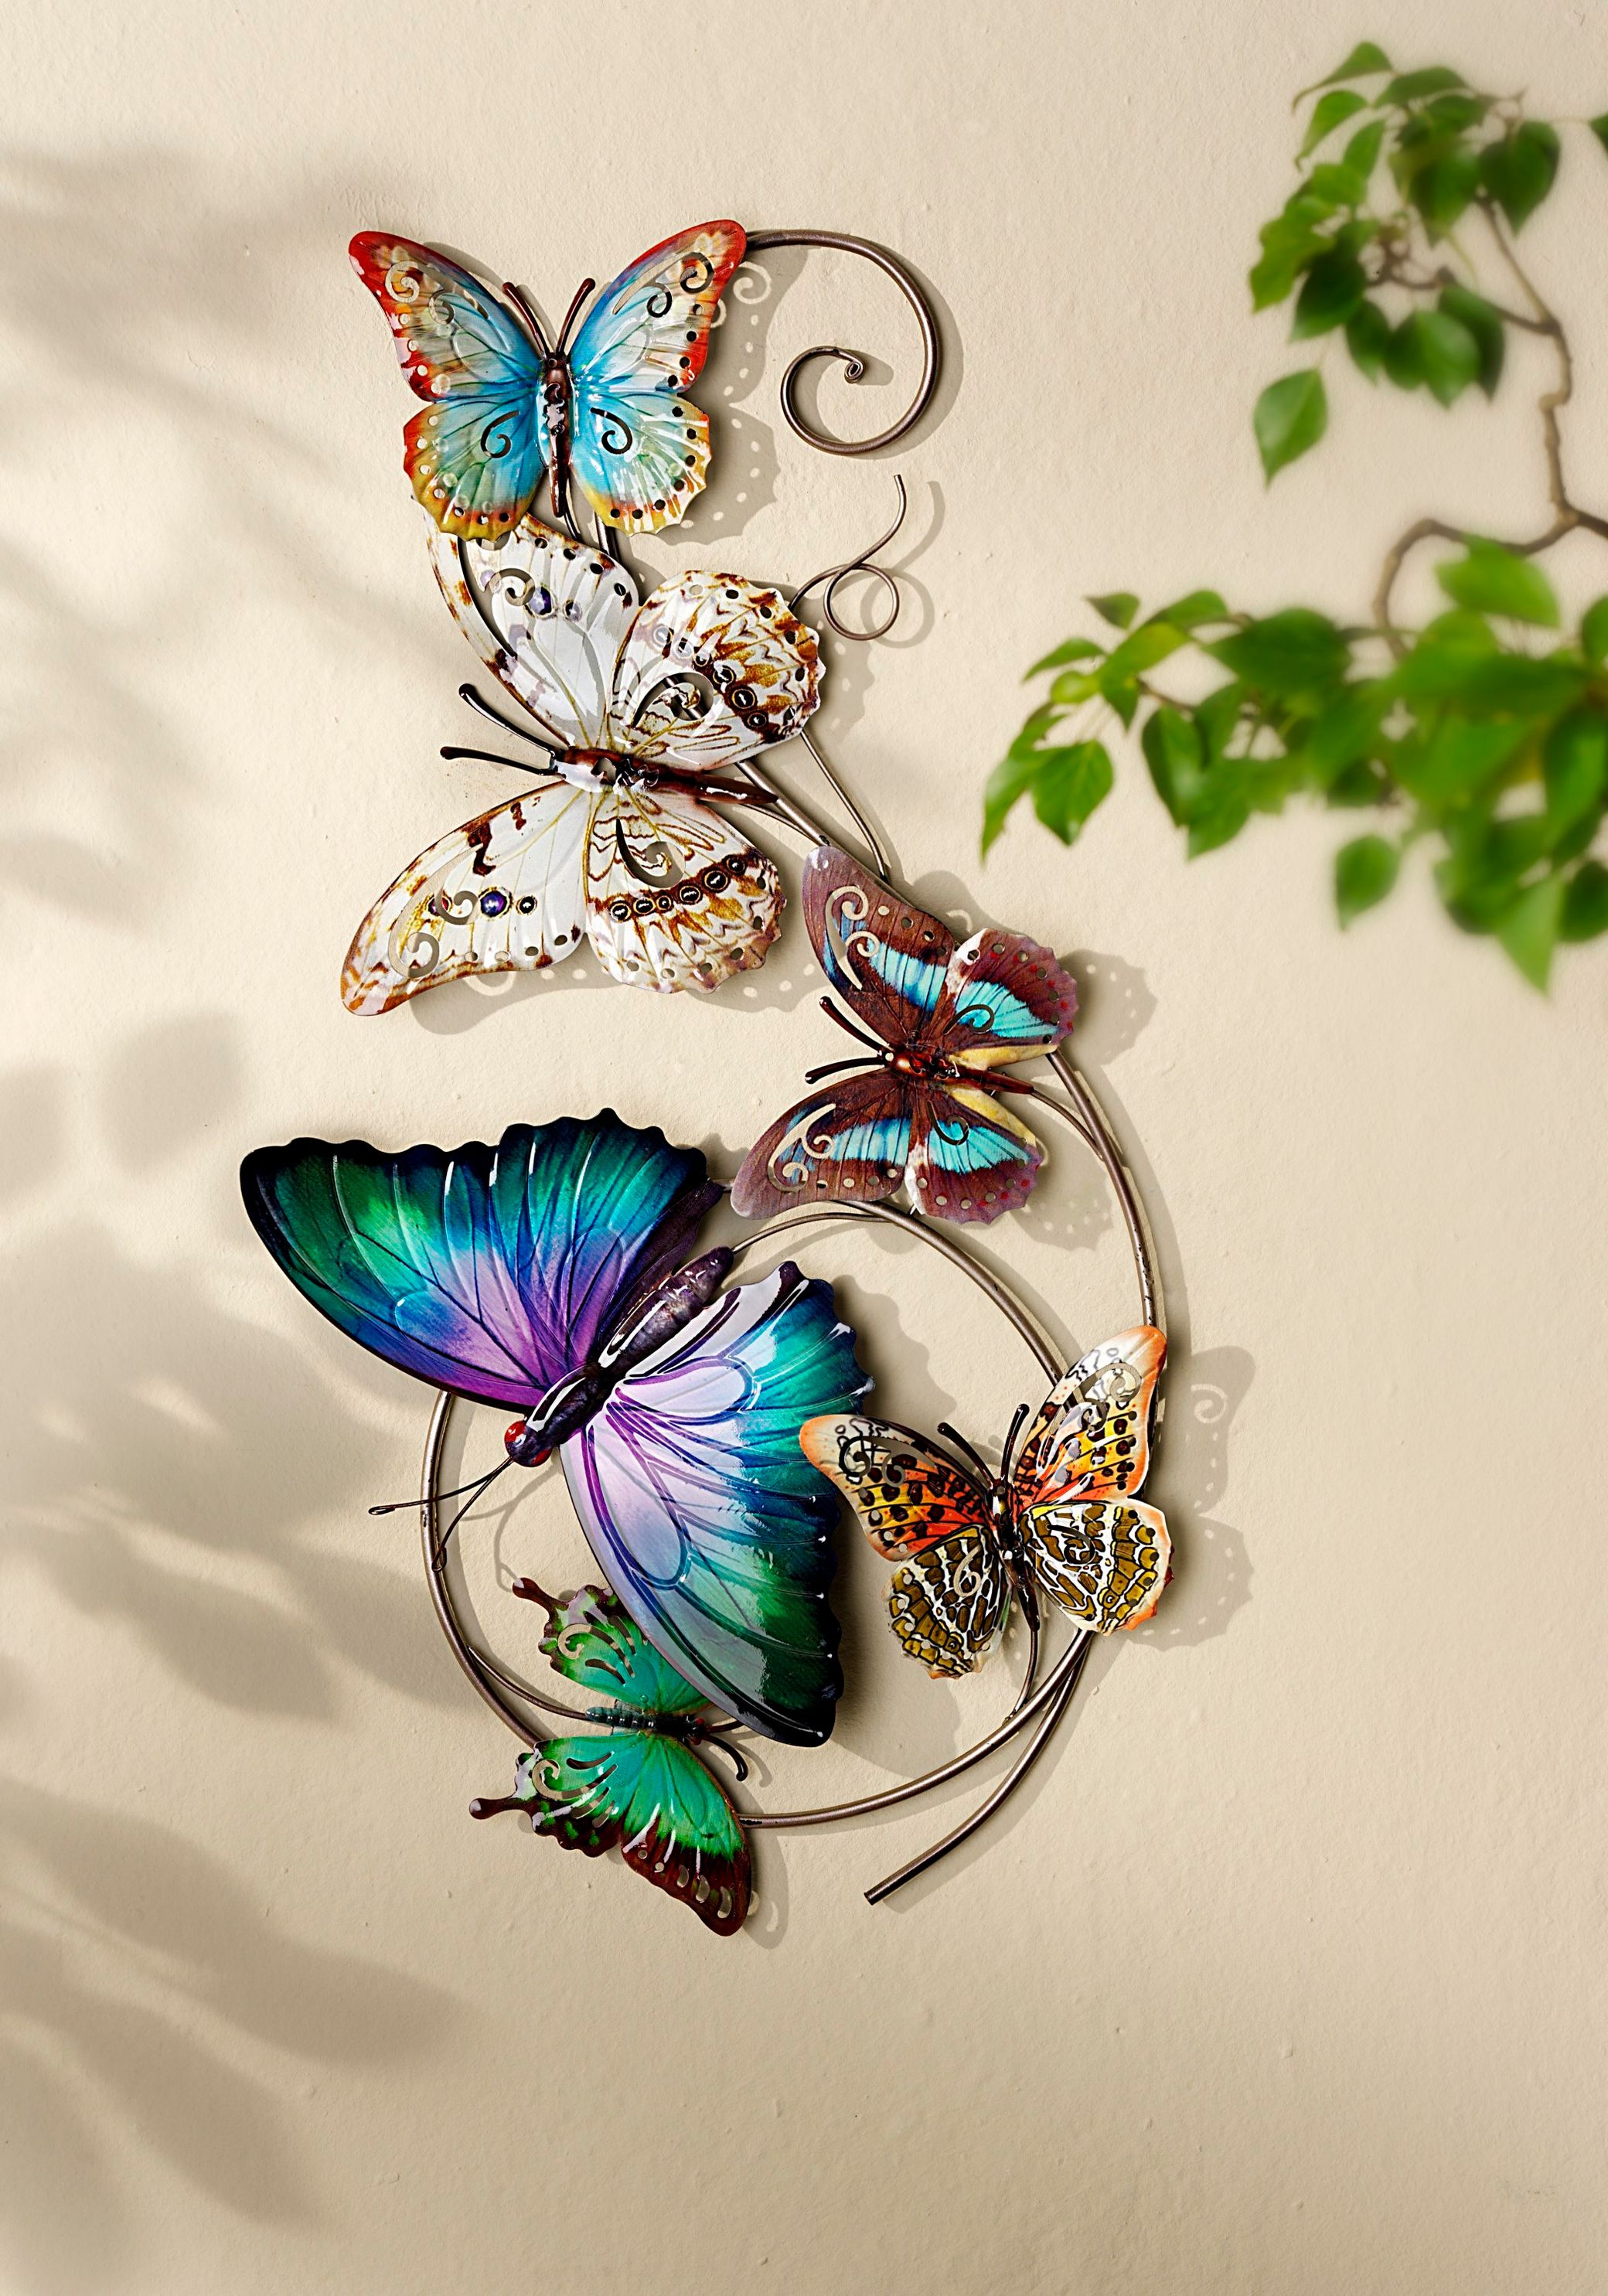 Wanddeko Schmetterlinge jetzt bei Weltbild.de bestellen